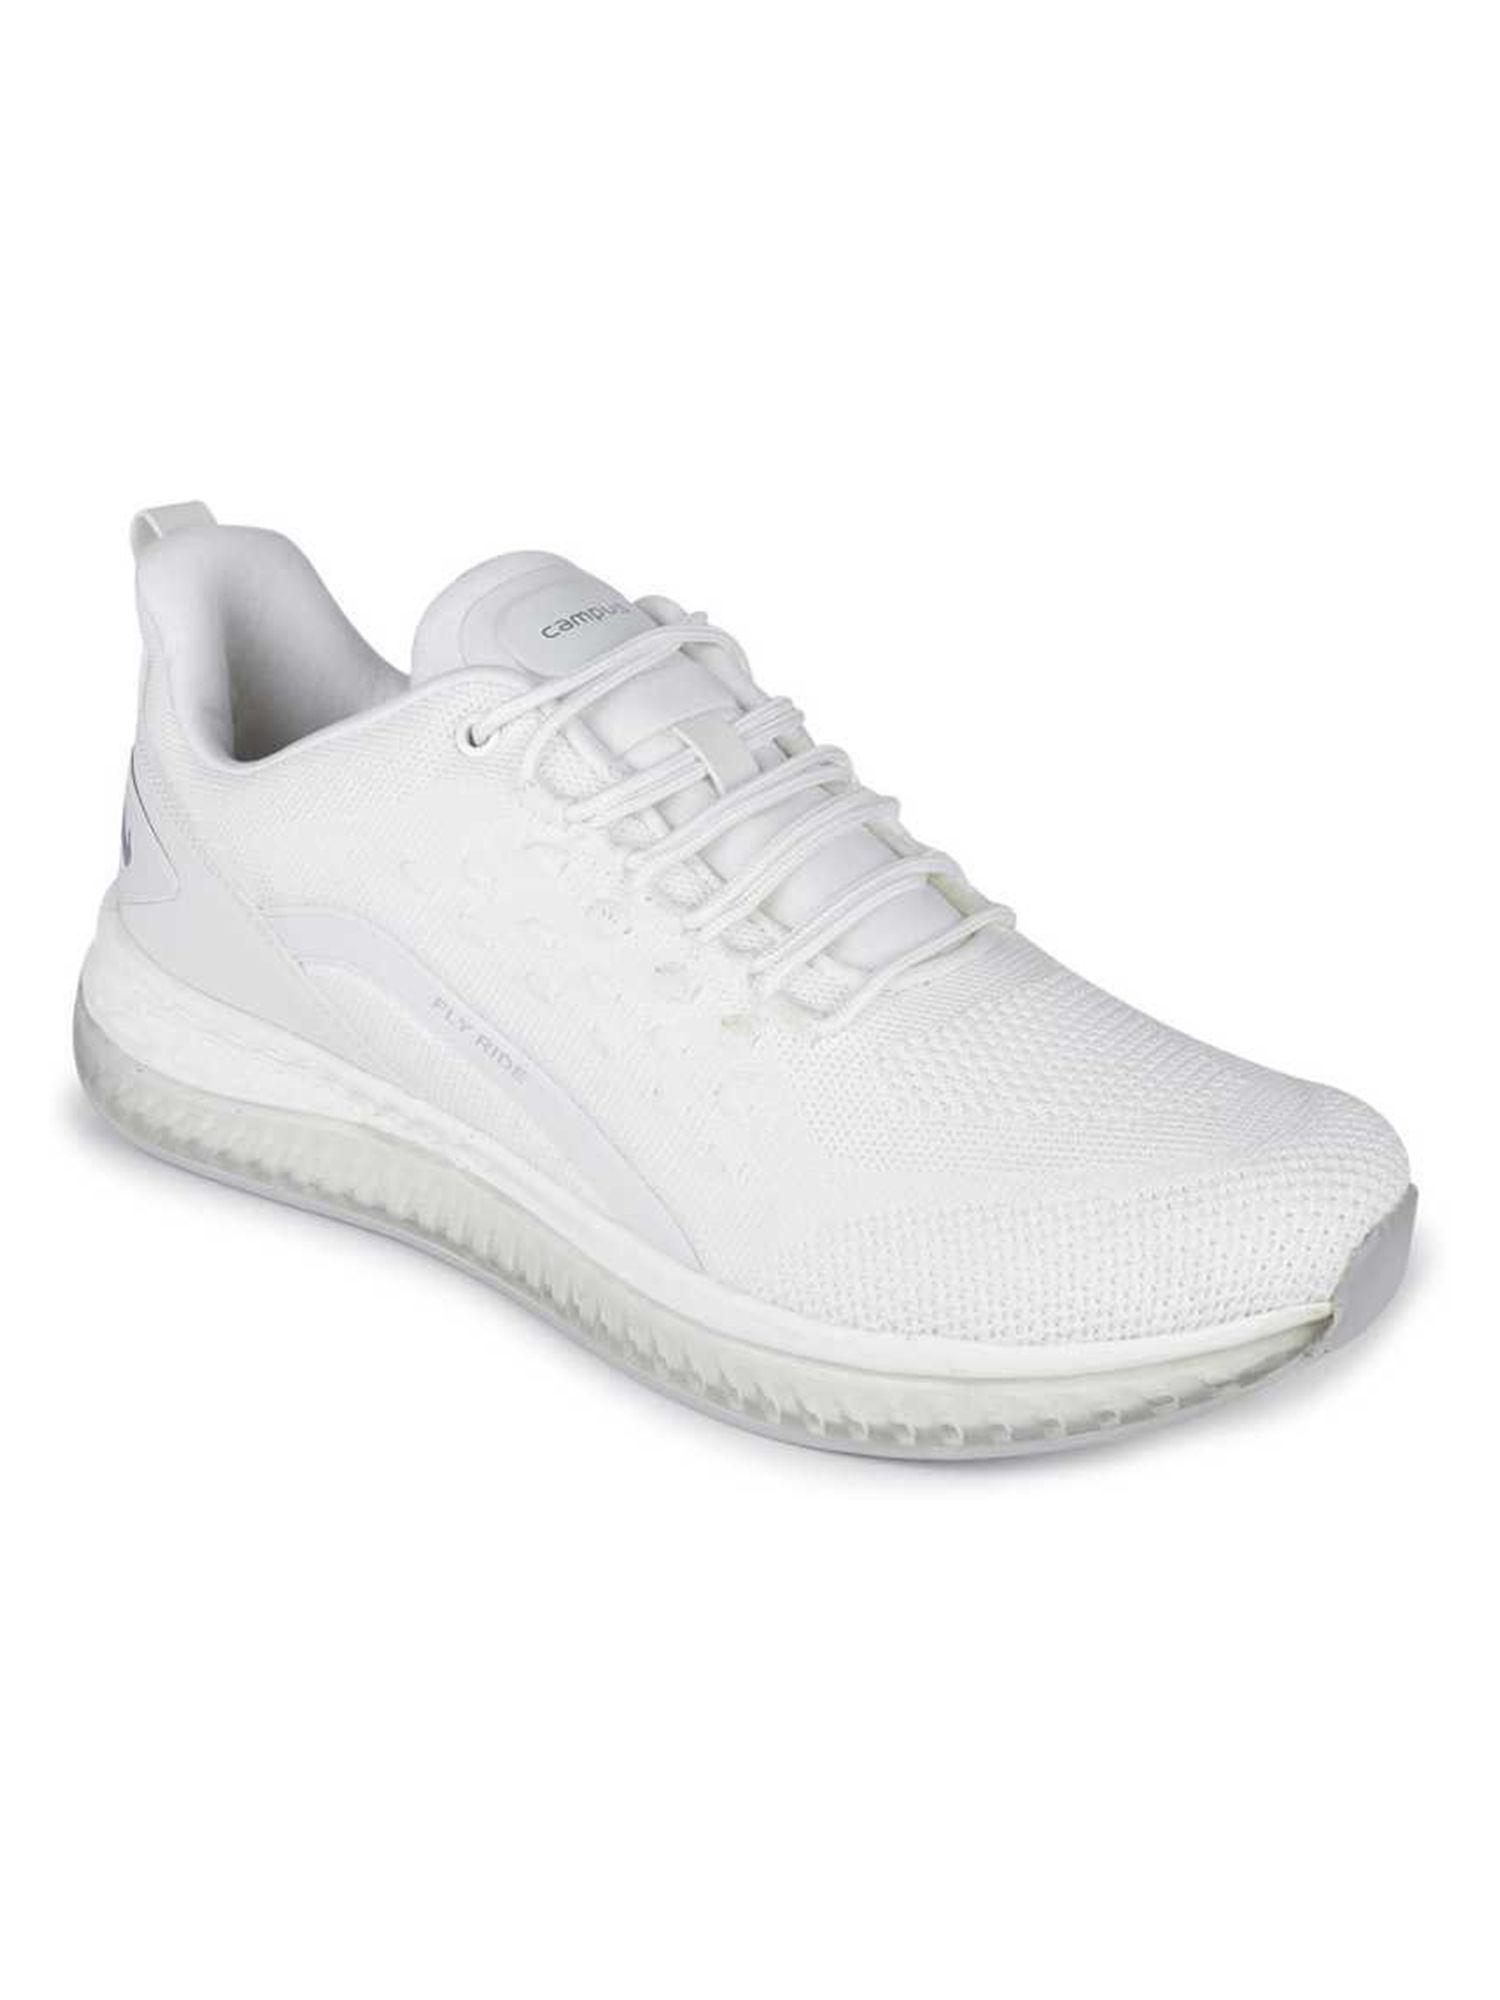 anthem white running shoes for men